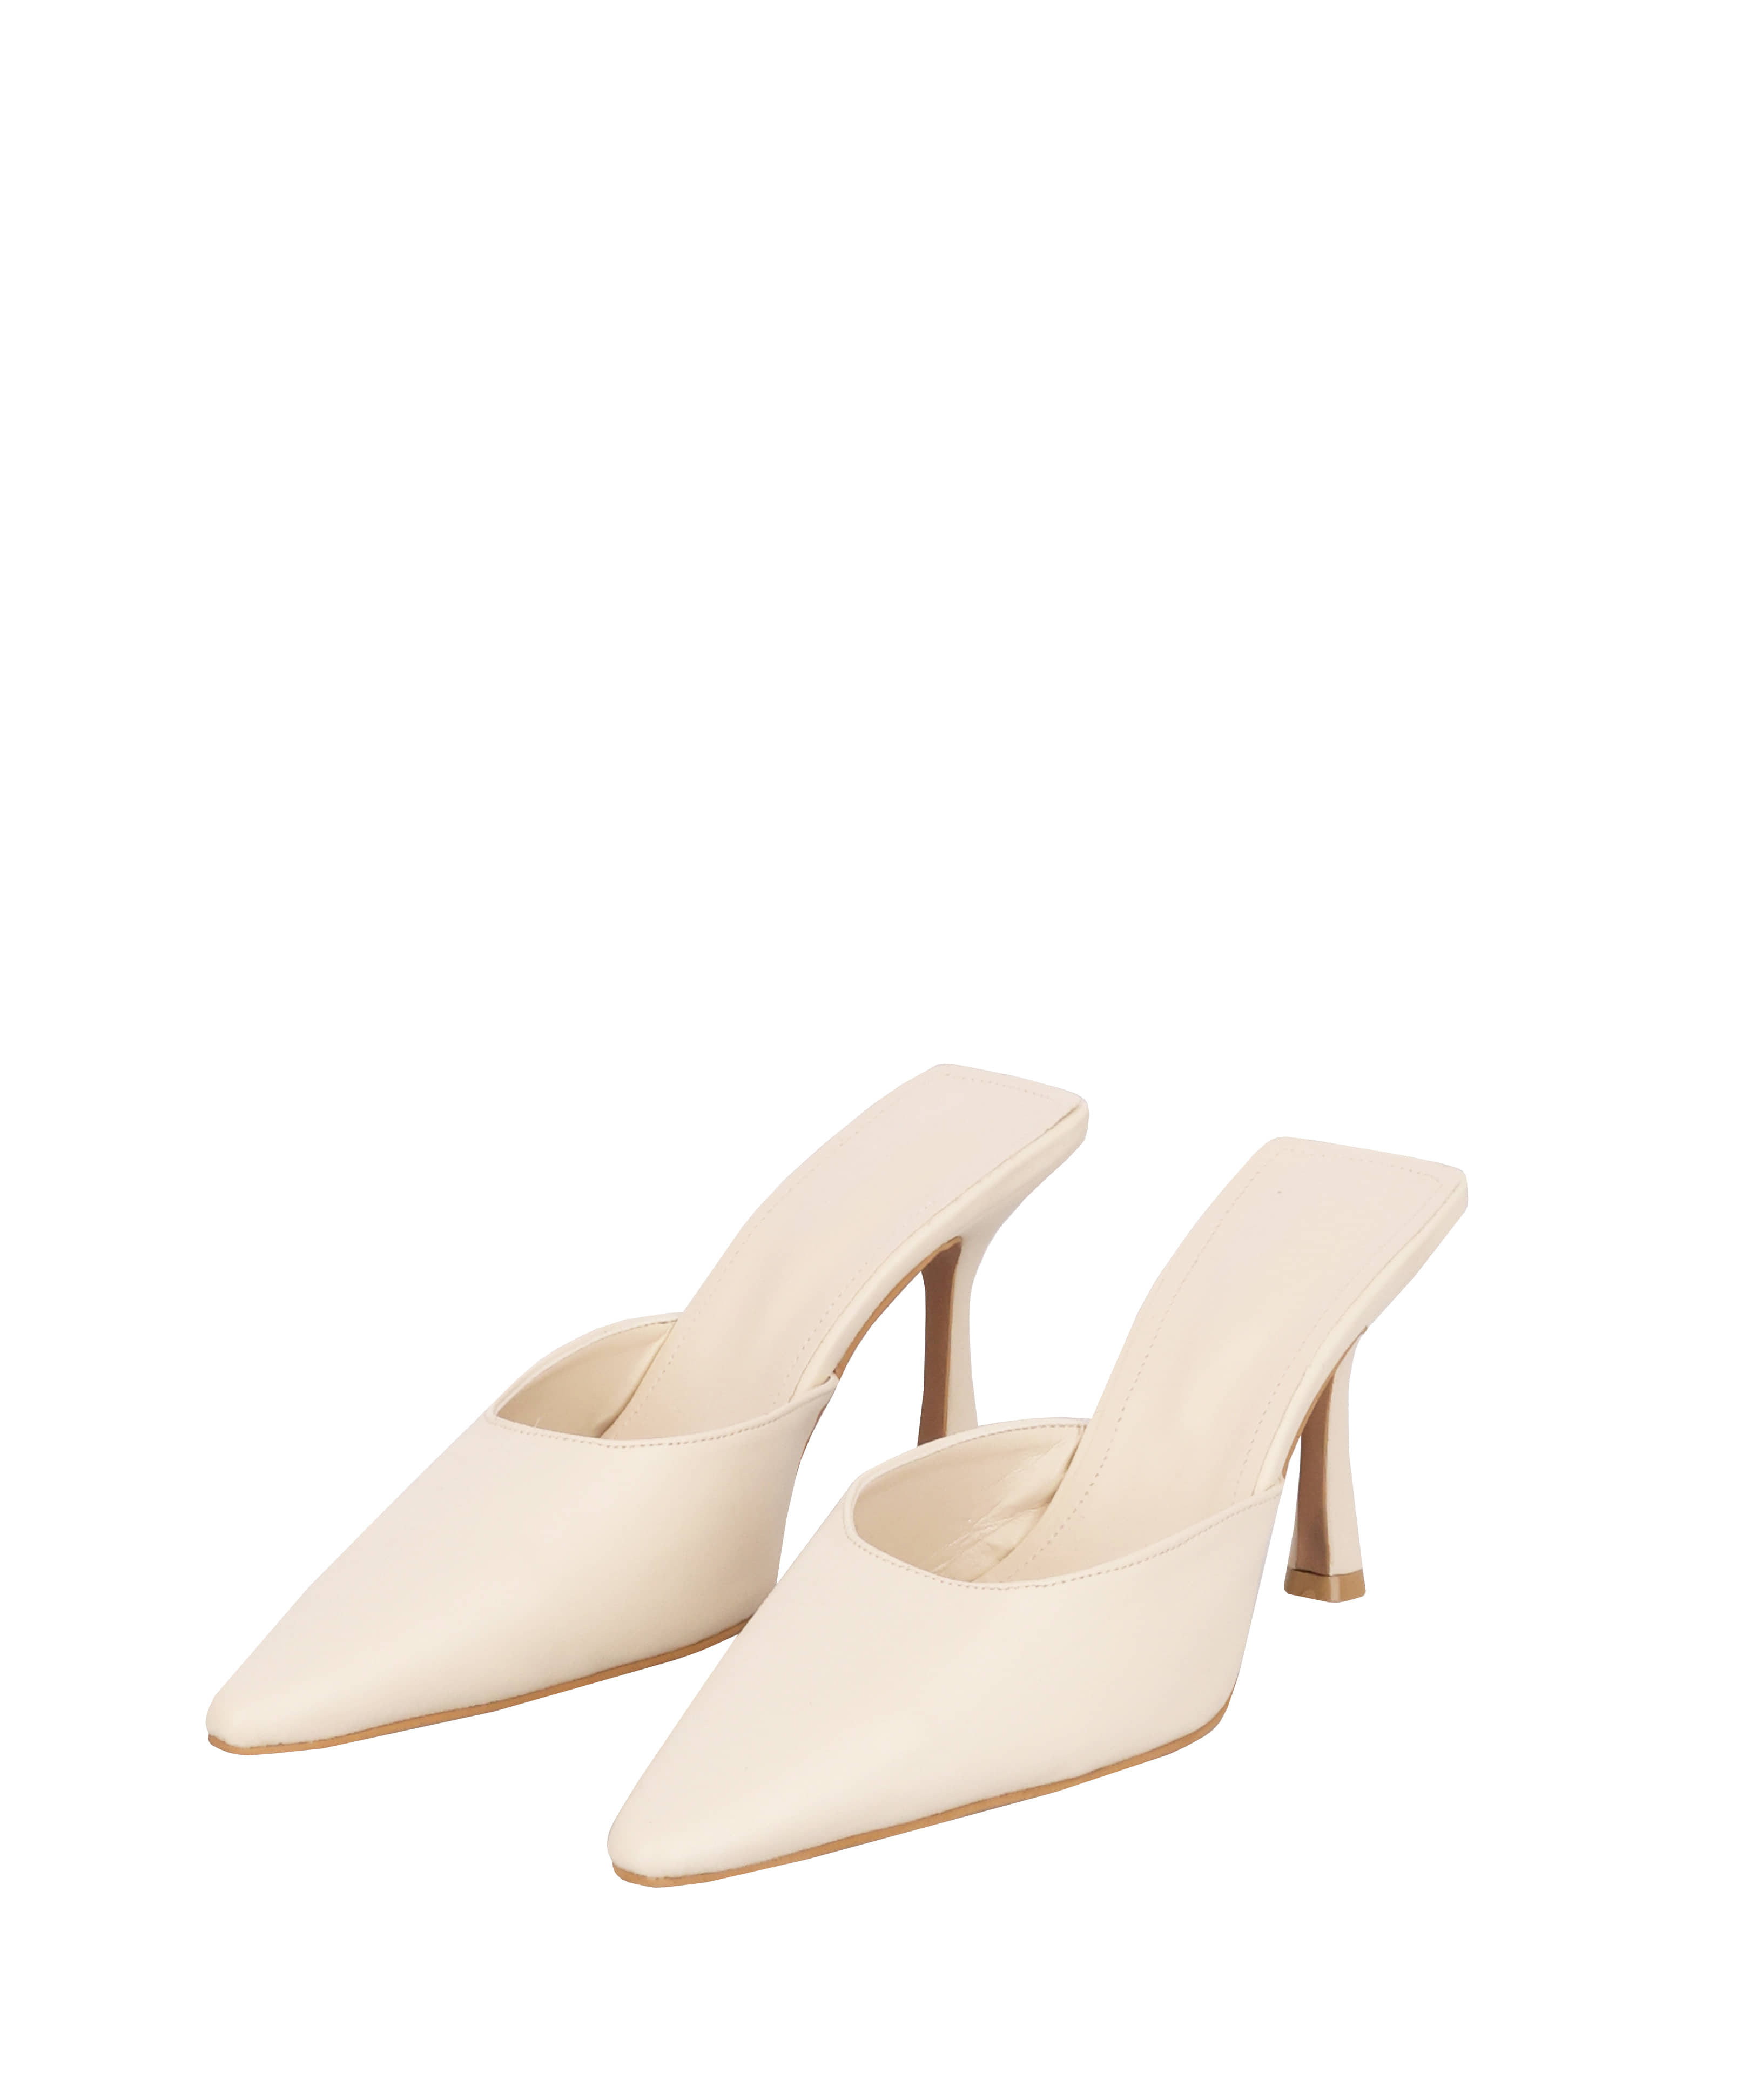 Creamy stiletto heels